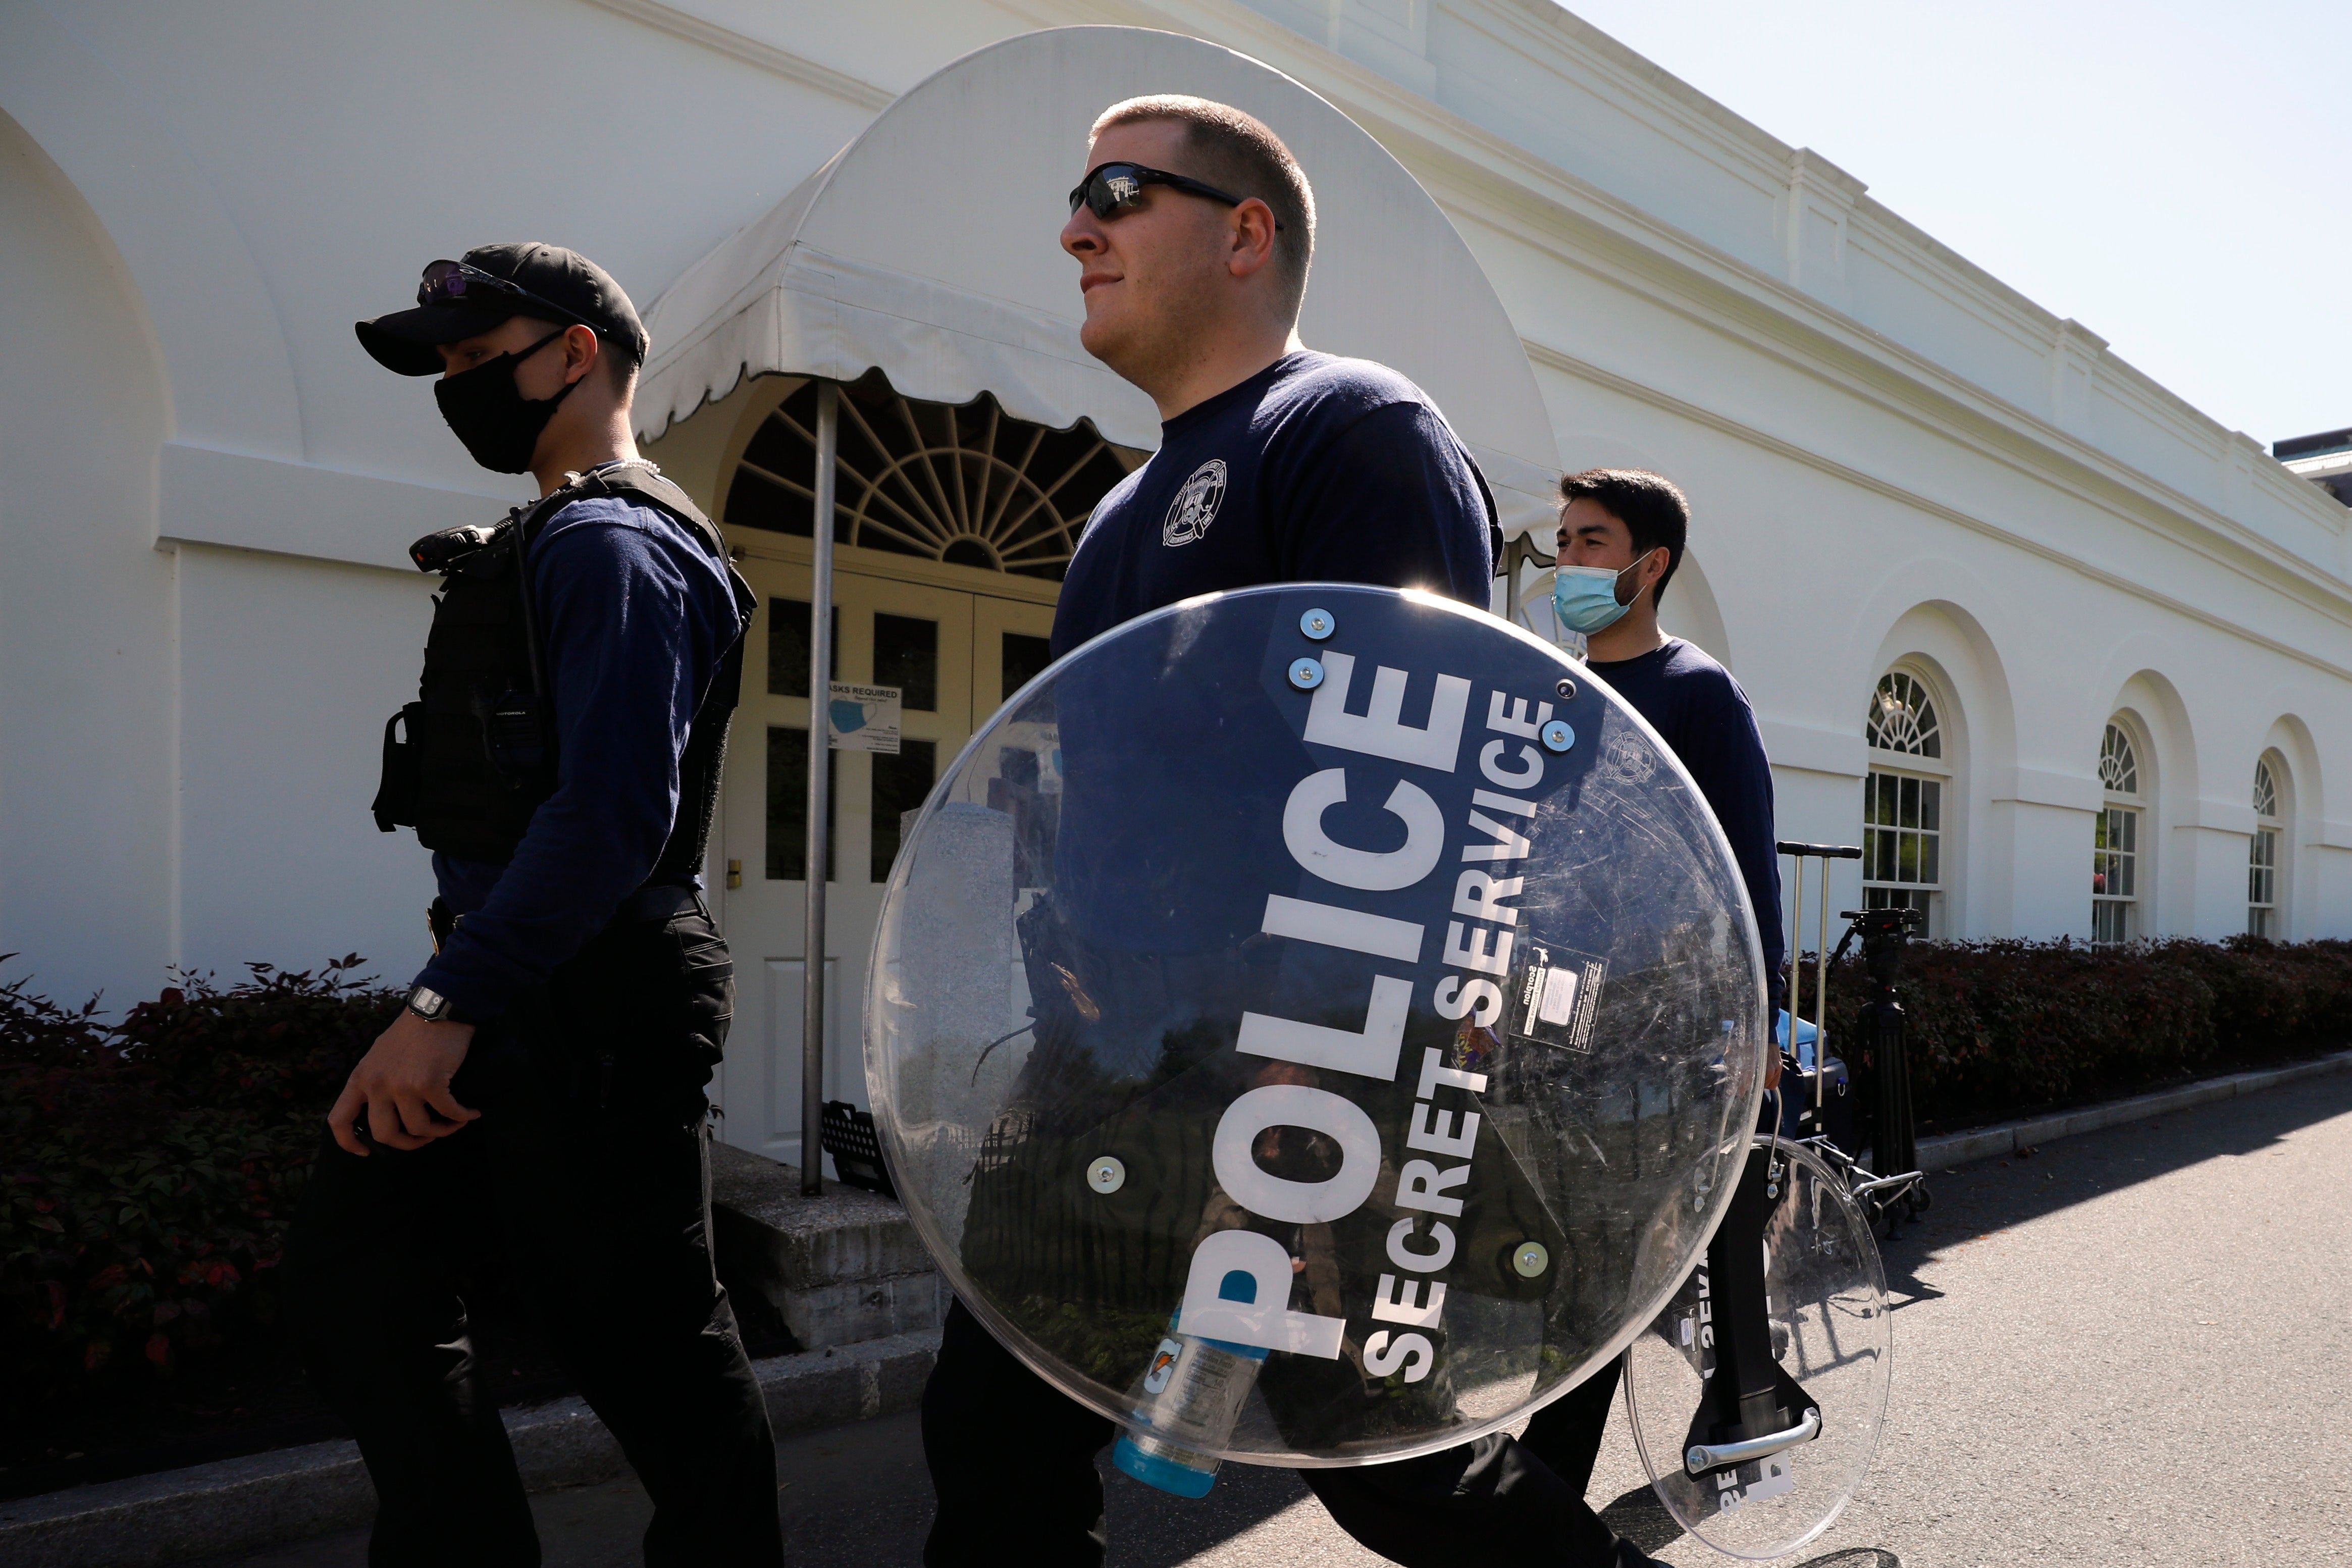 epa09148184 Members of US Secret Service carry riot shields on a driveway at the White House in Washington, DC, USA, on 20 April 2021. EPA/Yuri Gripas / POOL